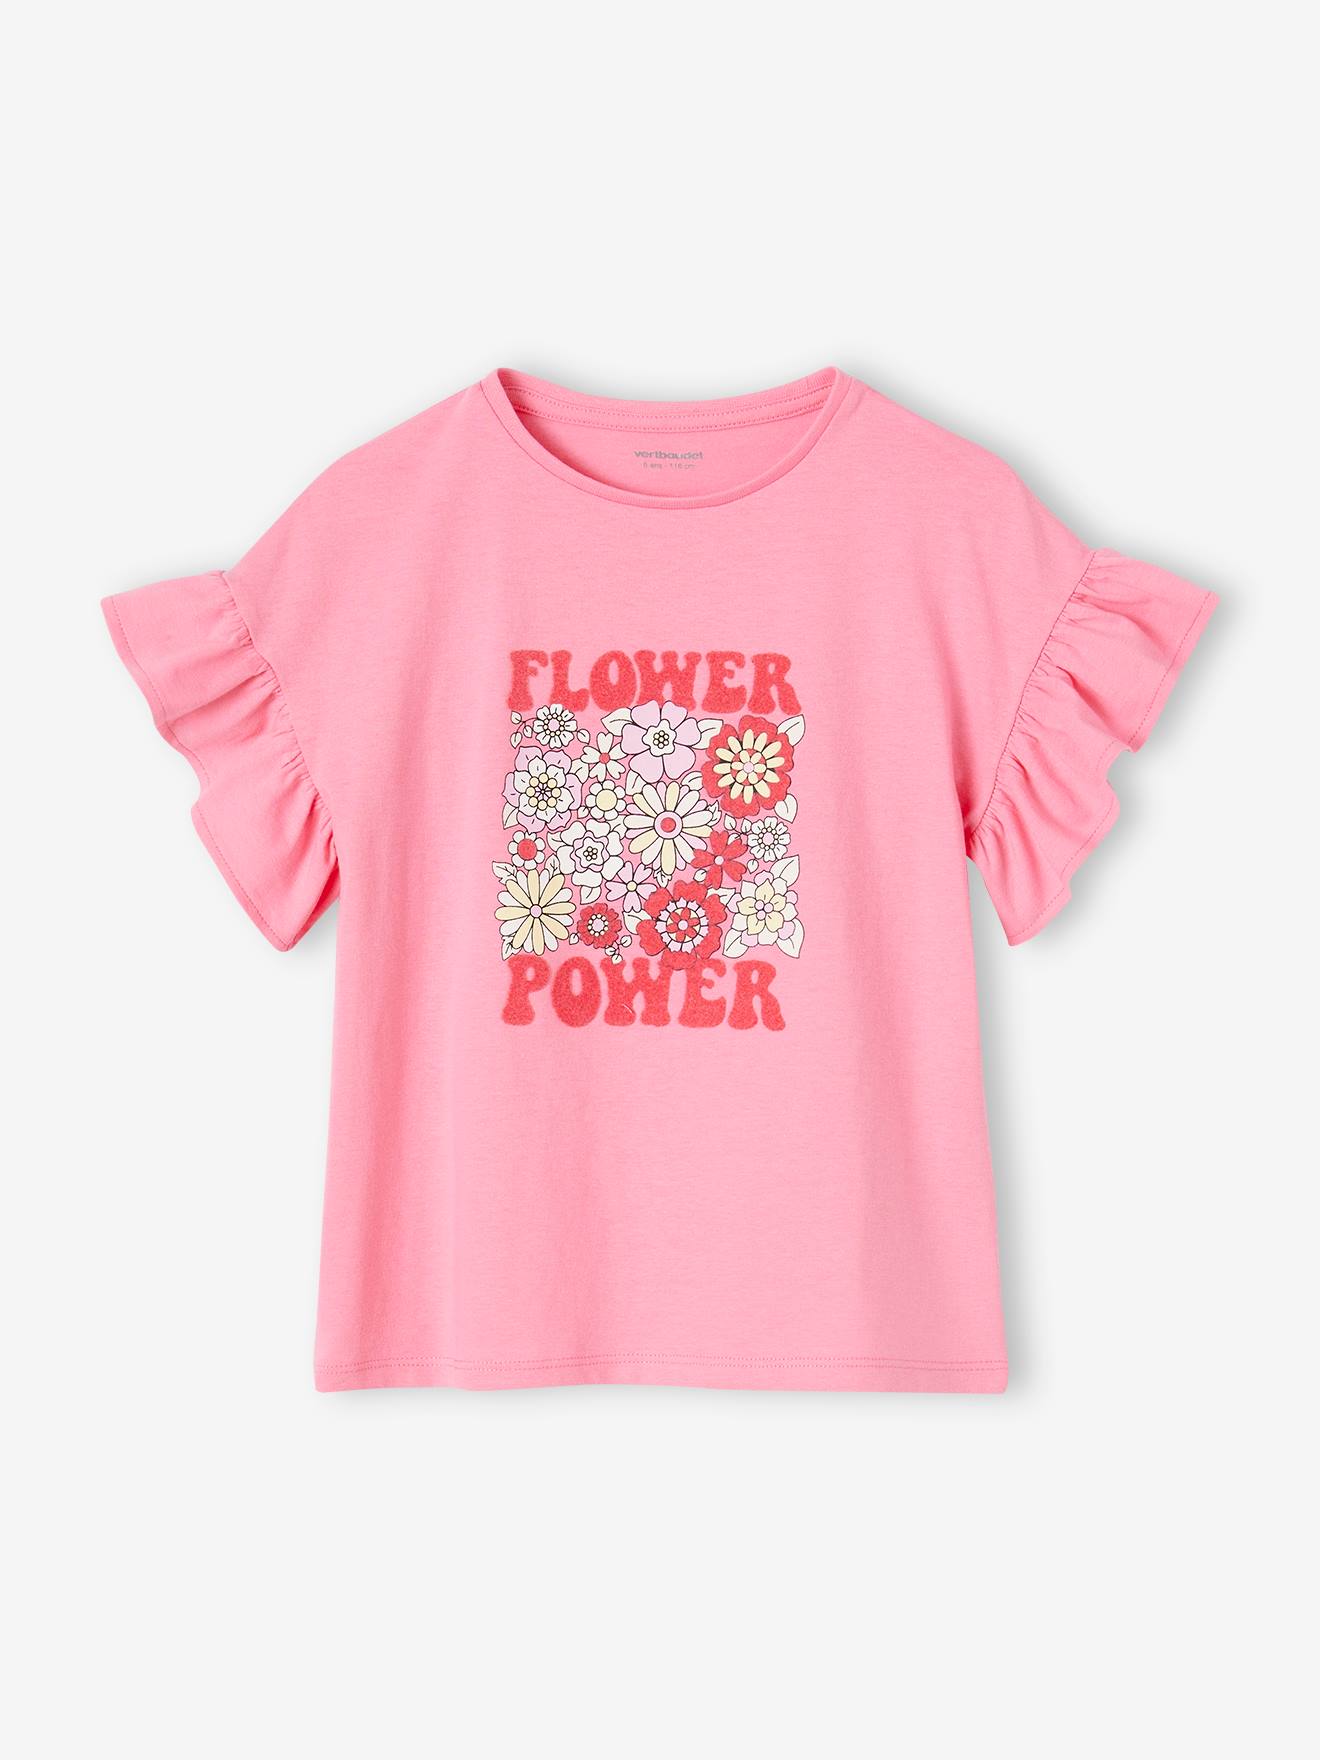 VERTBAUDET Camiseta "Flower Power" con volantes en las mangas para niña rosa chicle